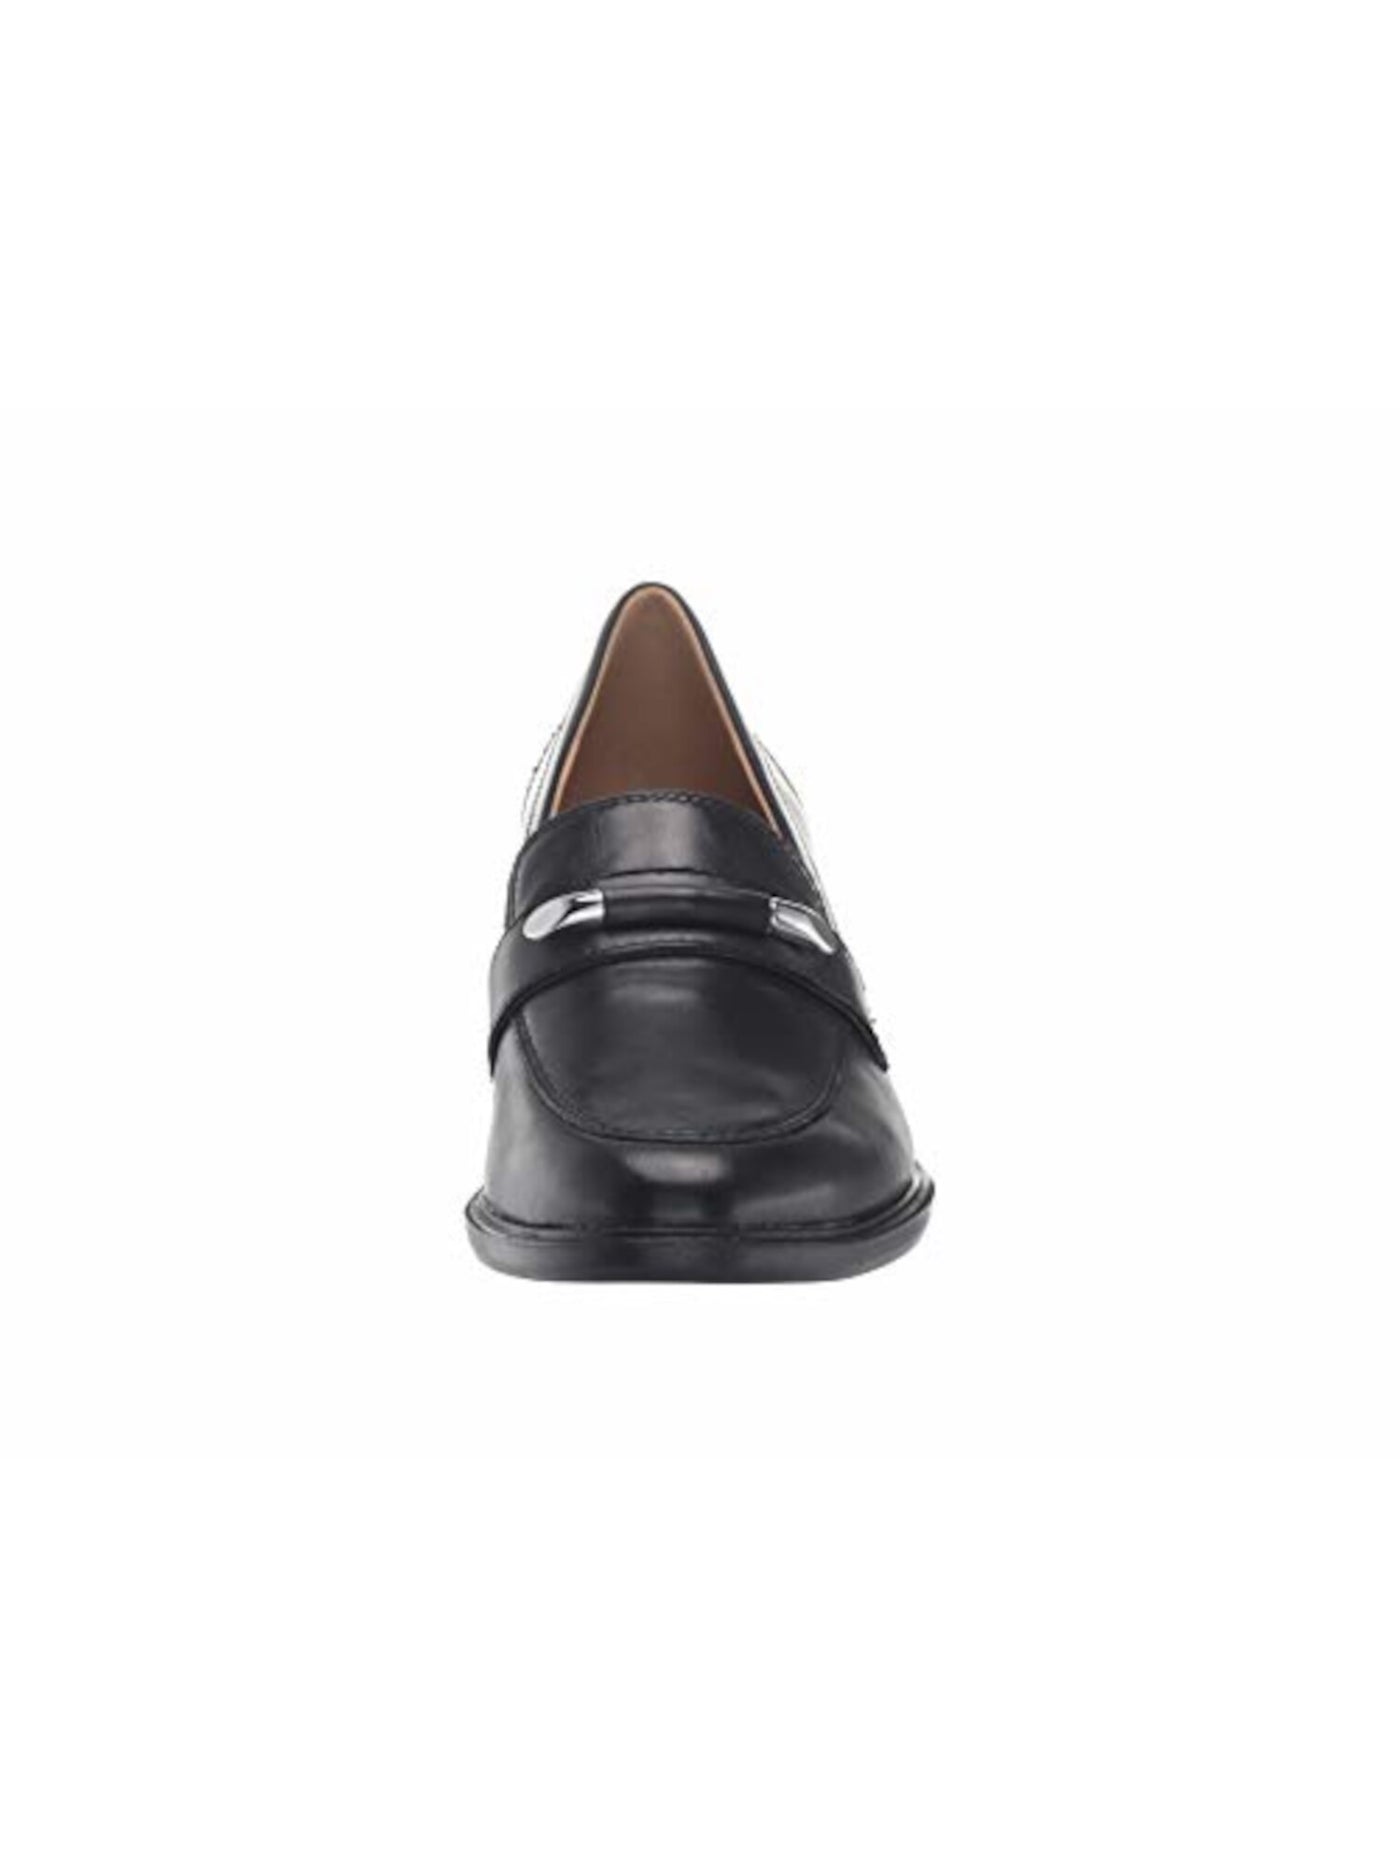 NATURALIZER Womens Black Padded Metallic Embellished Perla Round Toe Block Heel Slip On Leather Loafers 6 M